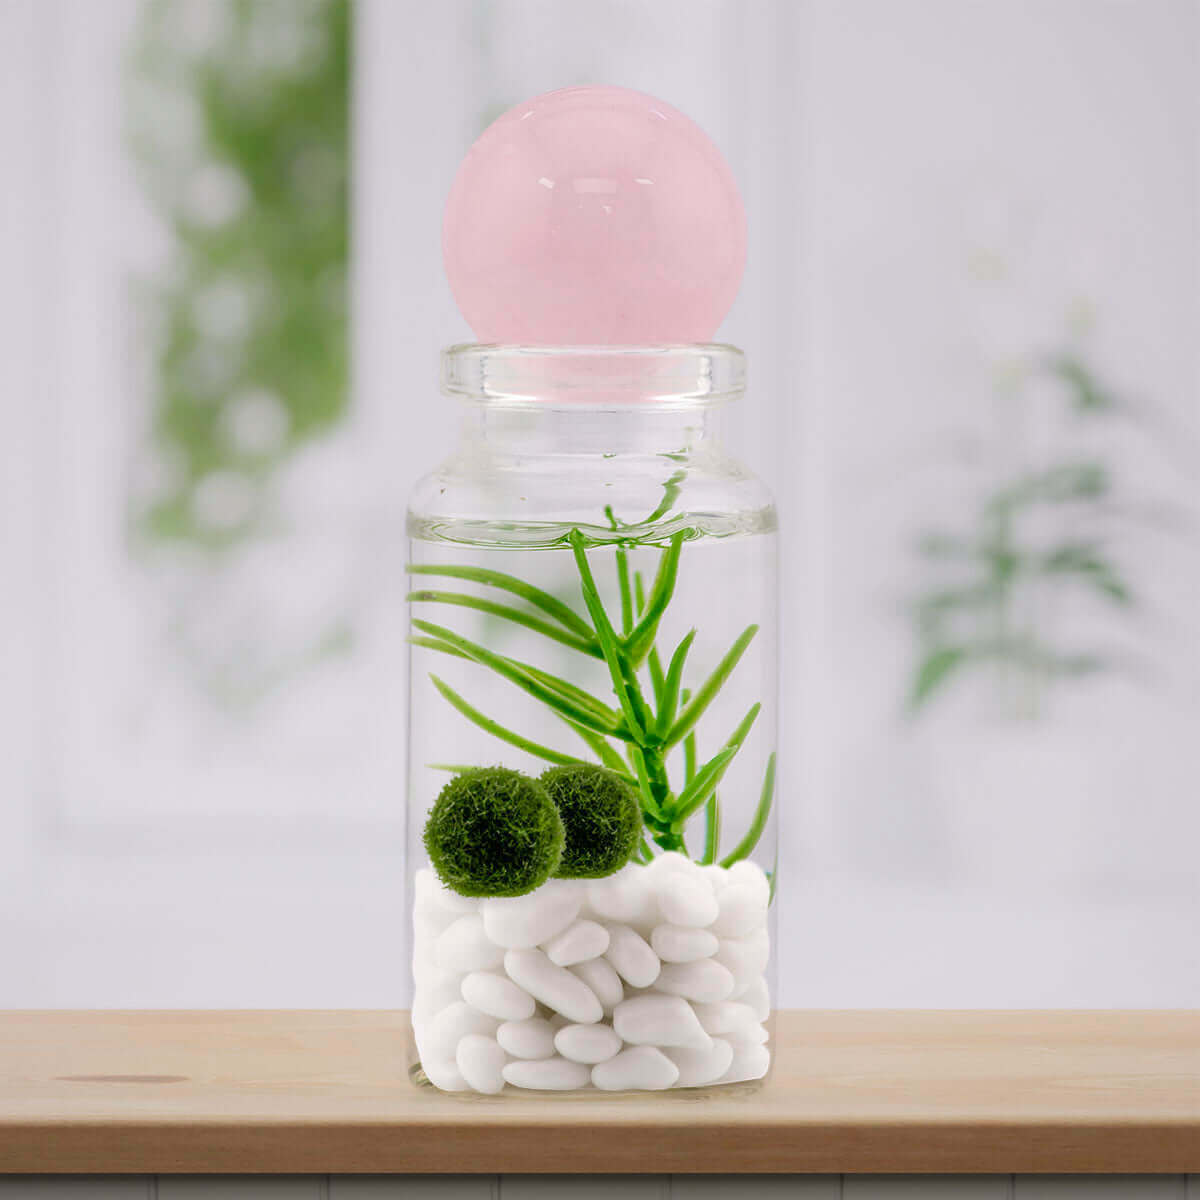 Rose Quartz sphere adding a soft pink warmth to a moss ball pet terrarium.